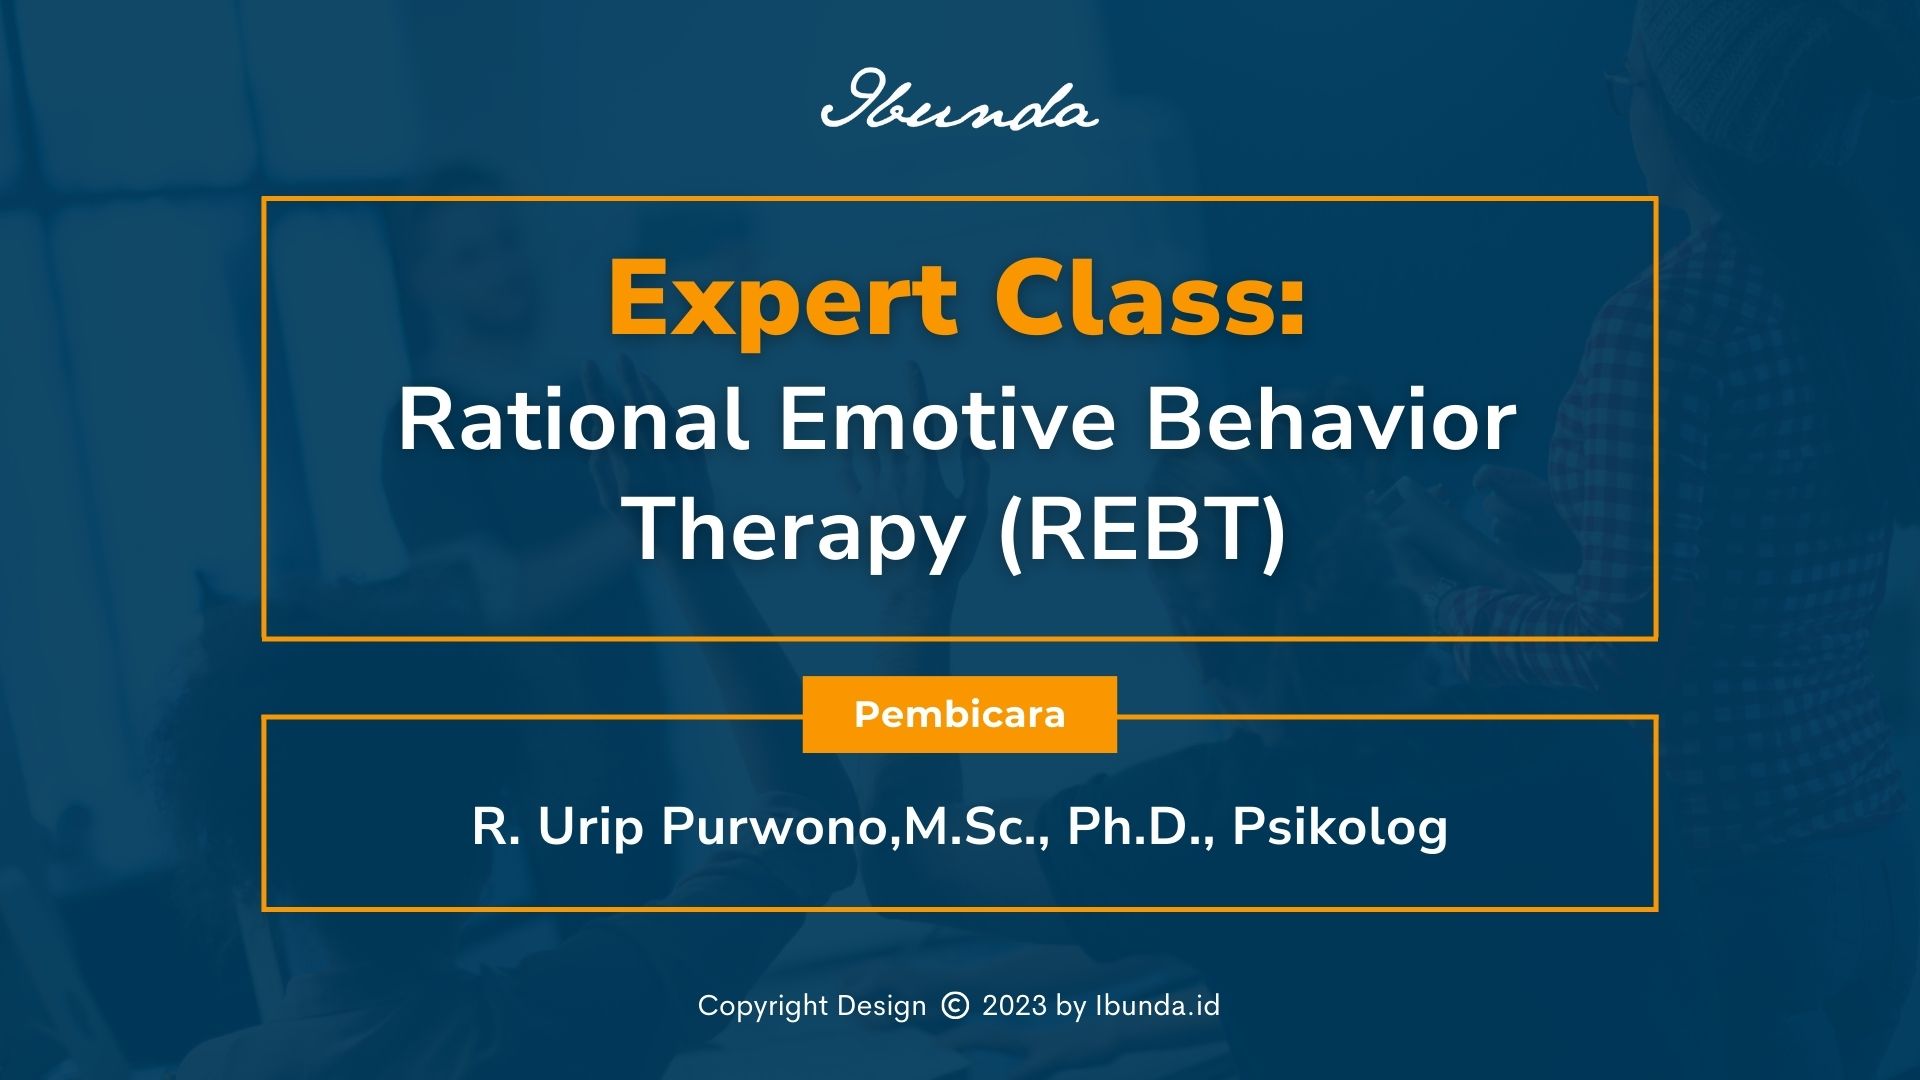 Expert Class: Rational Emotive Behavior Therapy (REBT)